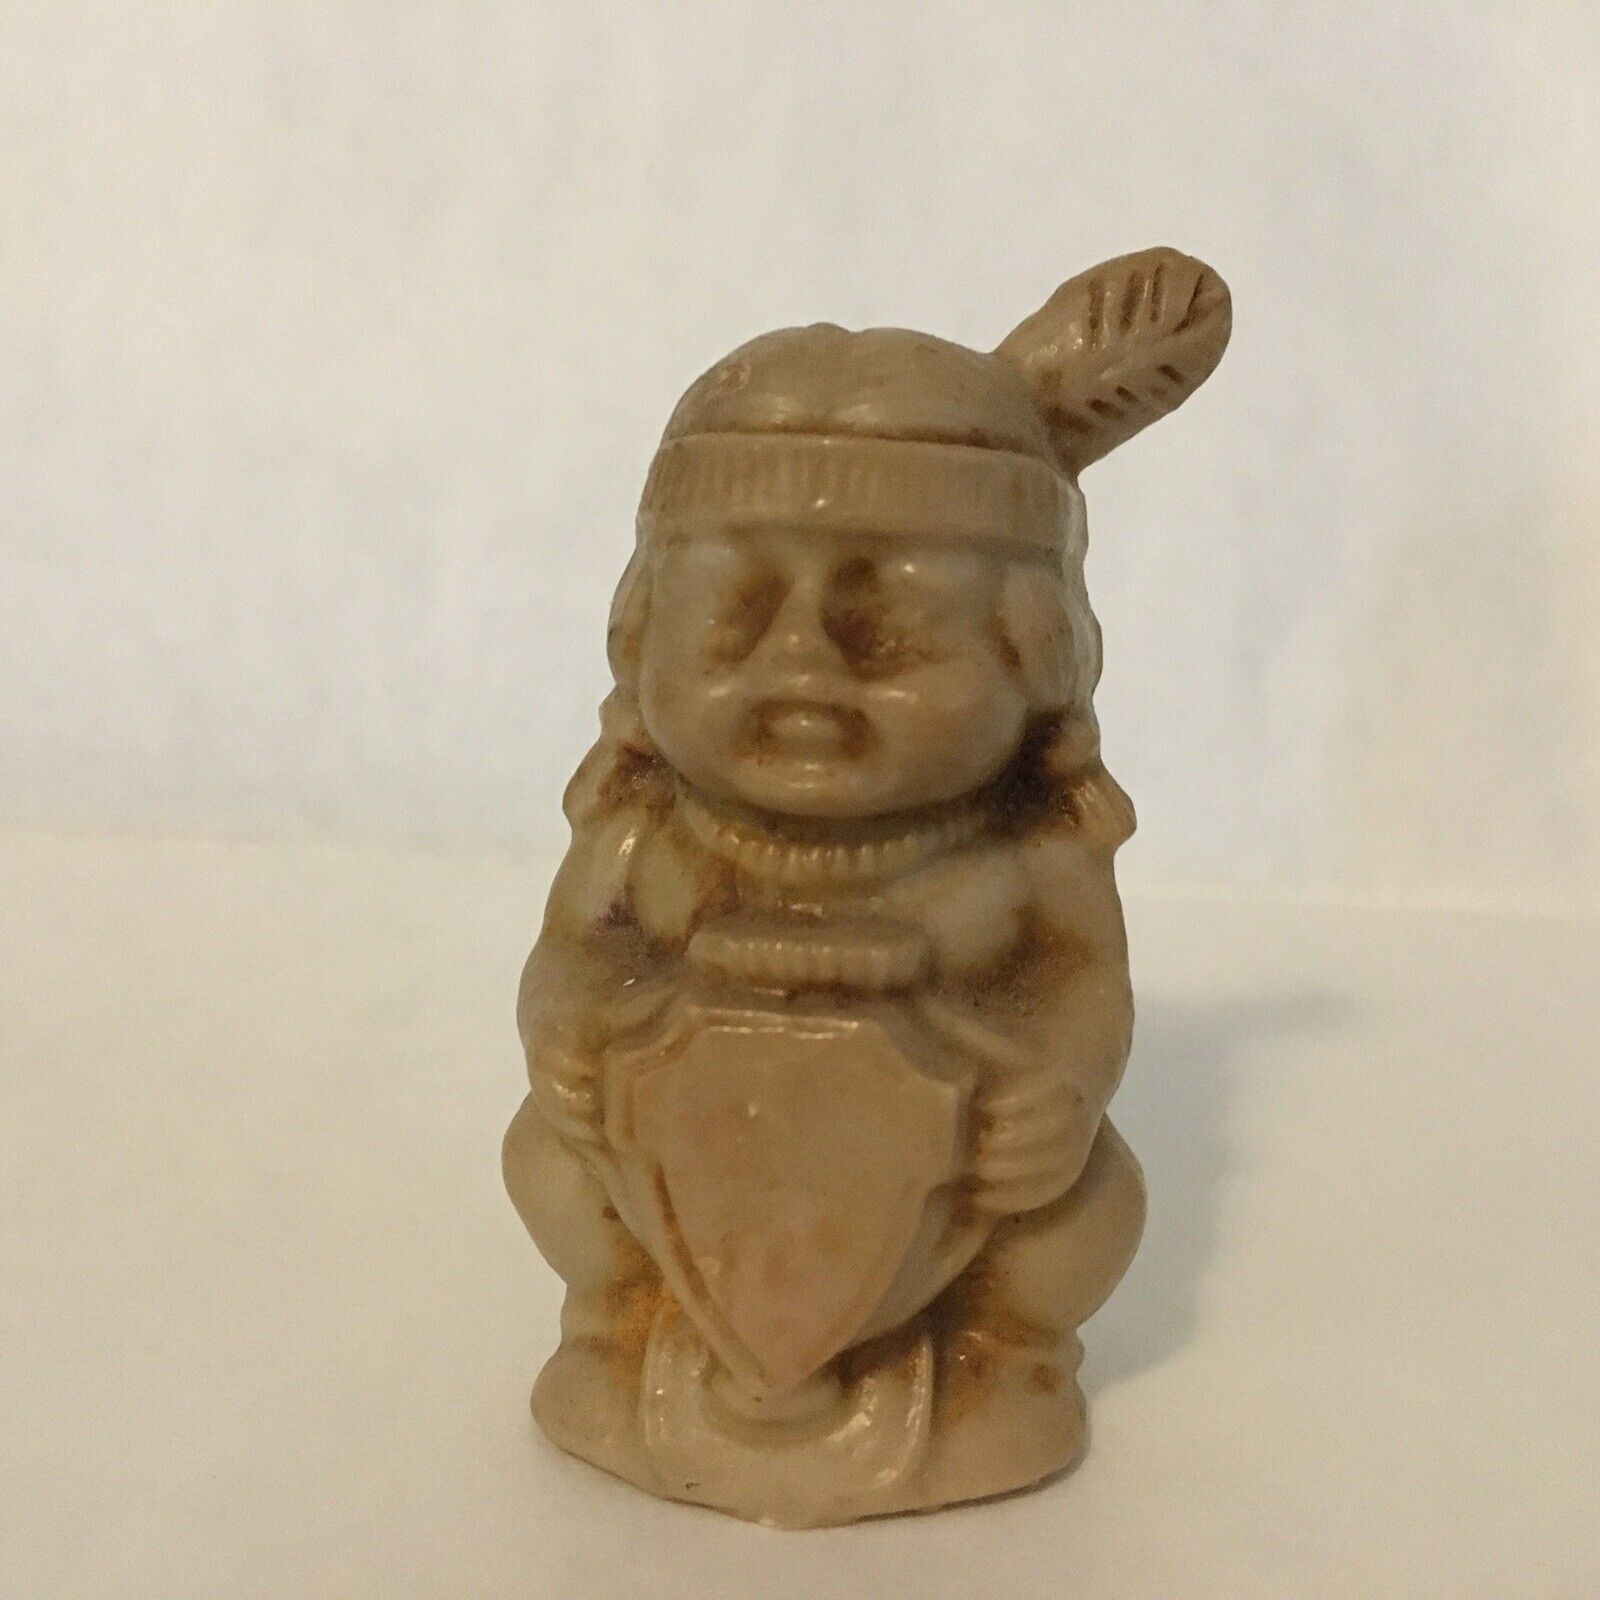 Vintage Native American Indian Resin Figurine 2.5”